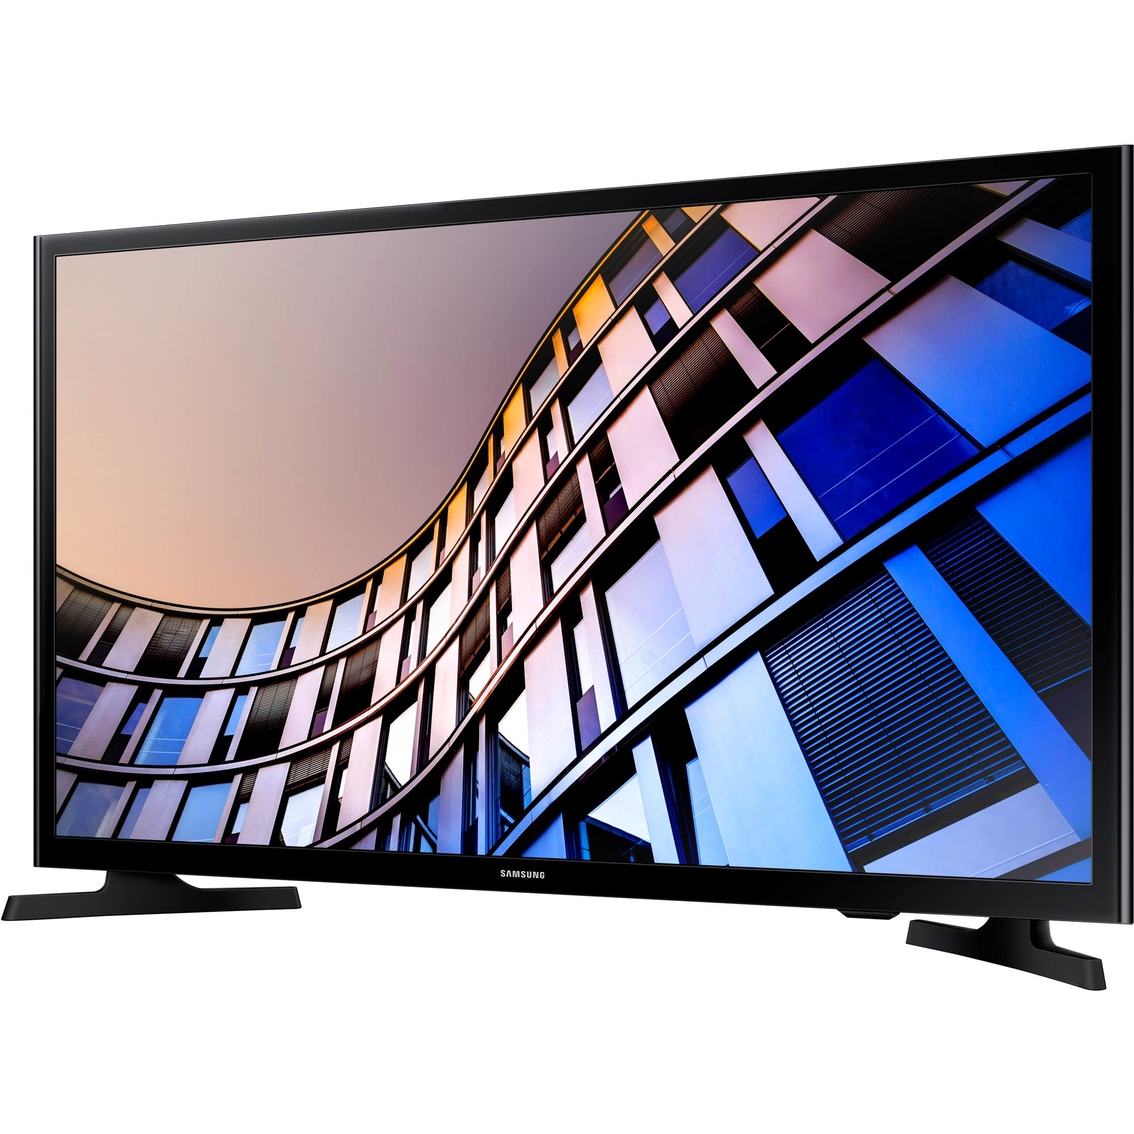 Samsung 32 in. LED 60Hz Smart TV UN32M4500 - Image 4 of 4